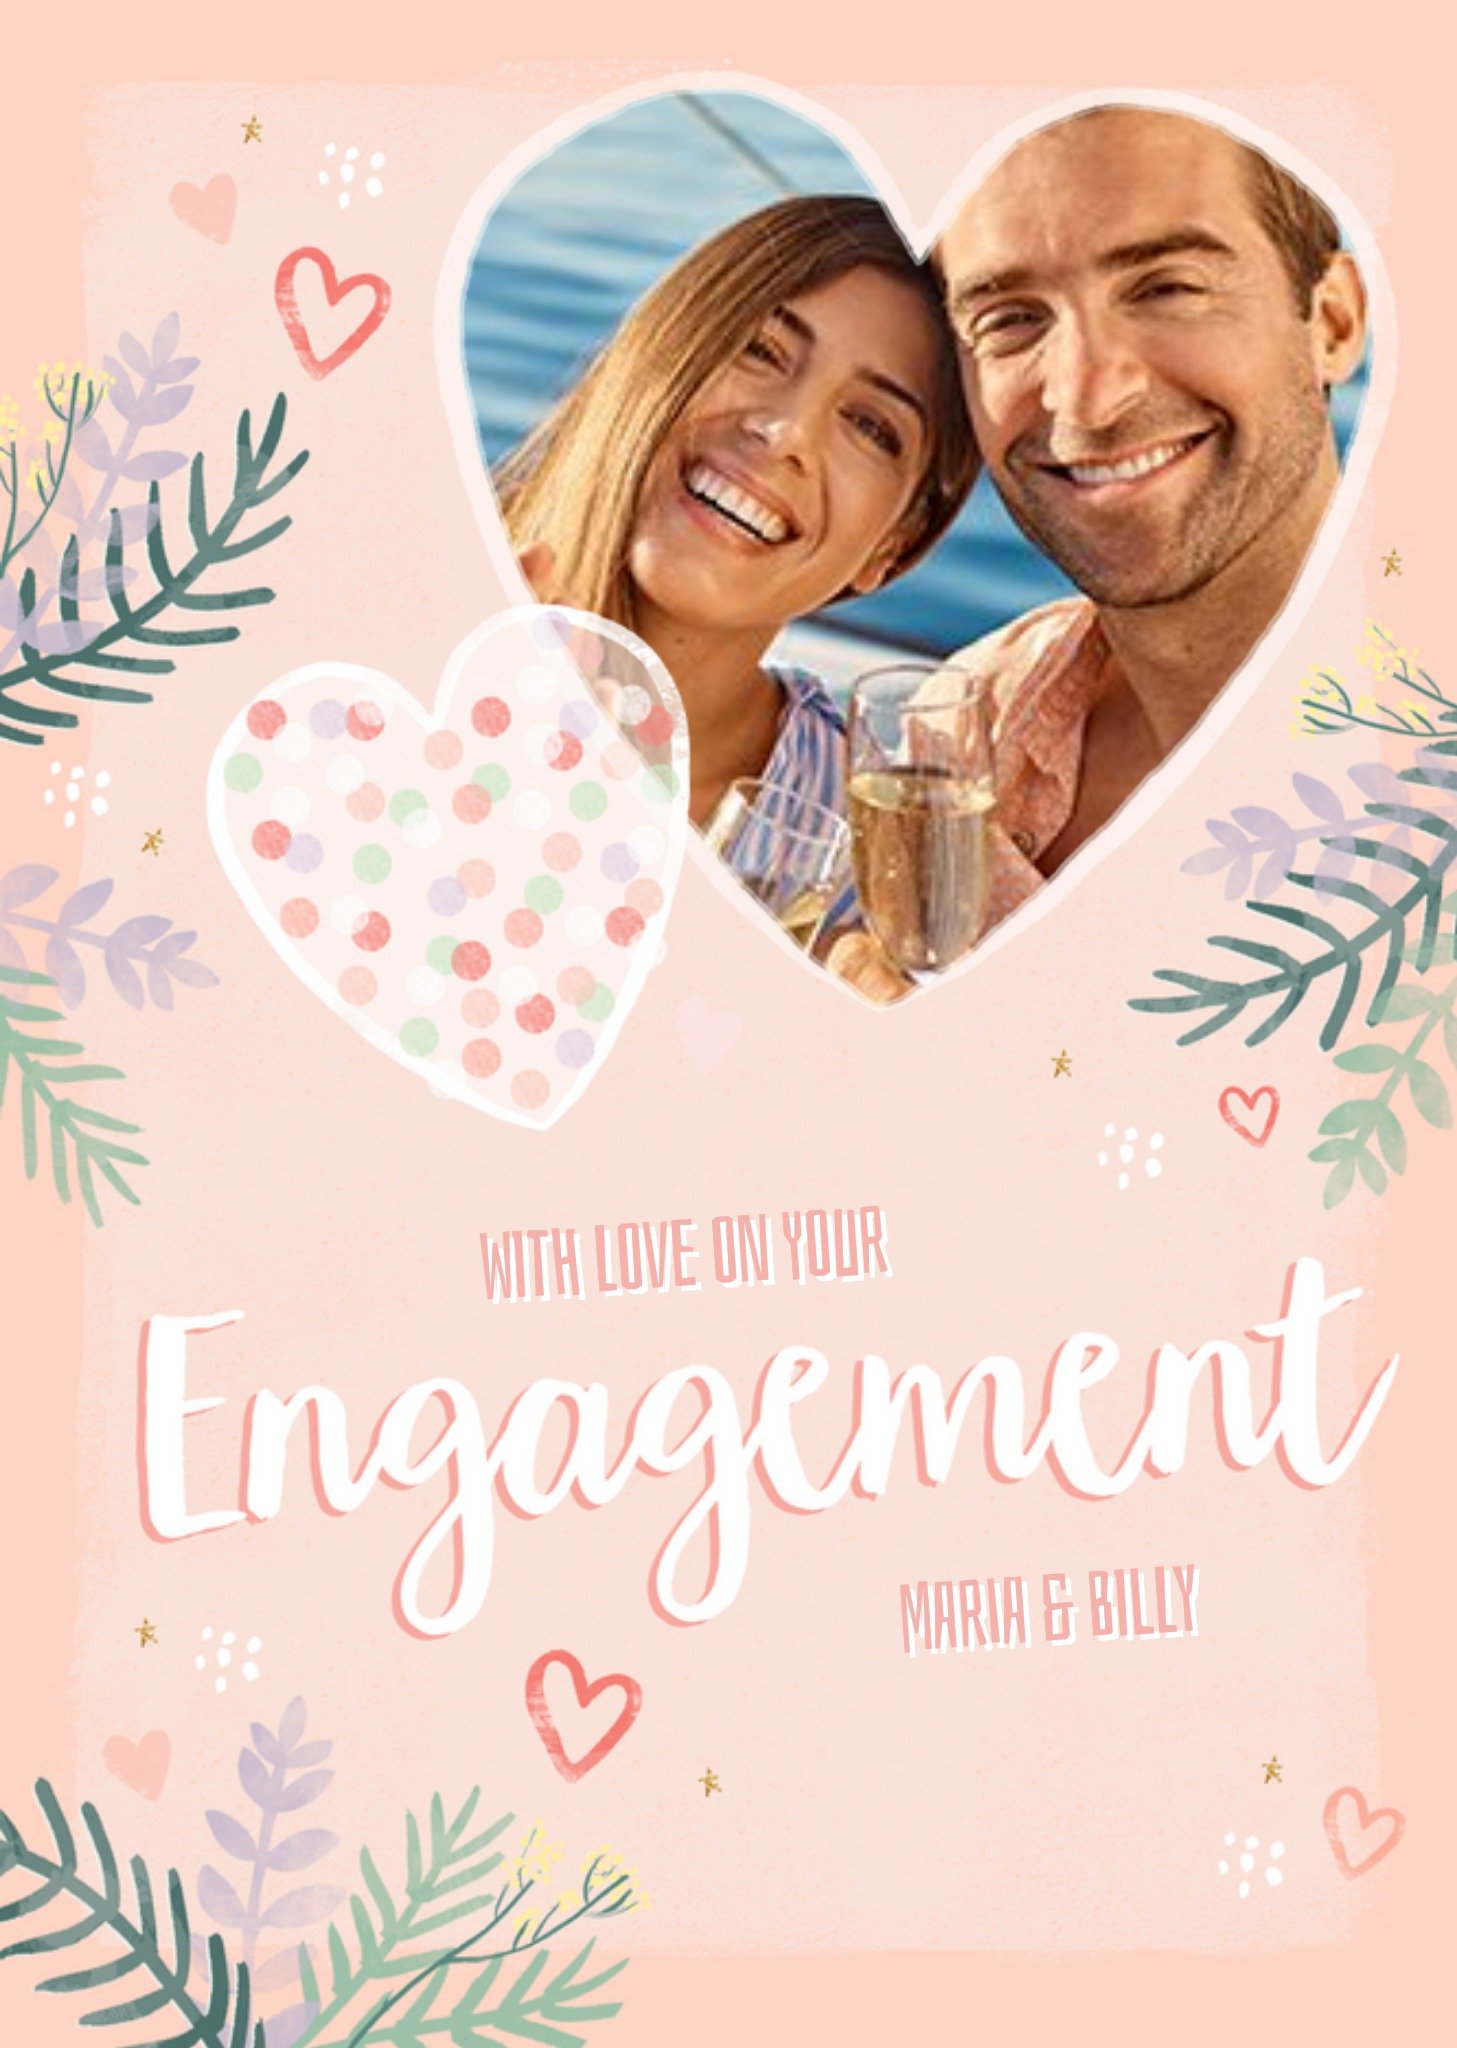 Love Hearts Studio Sundae Wonder Wish Love Engagement Photo Upload Card, Large